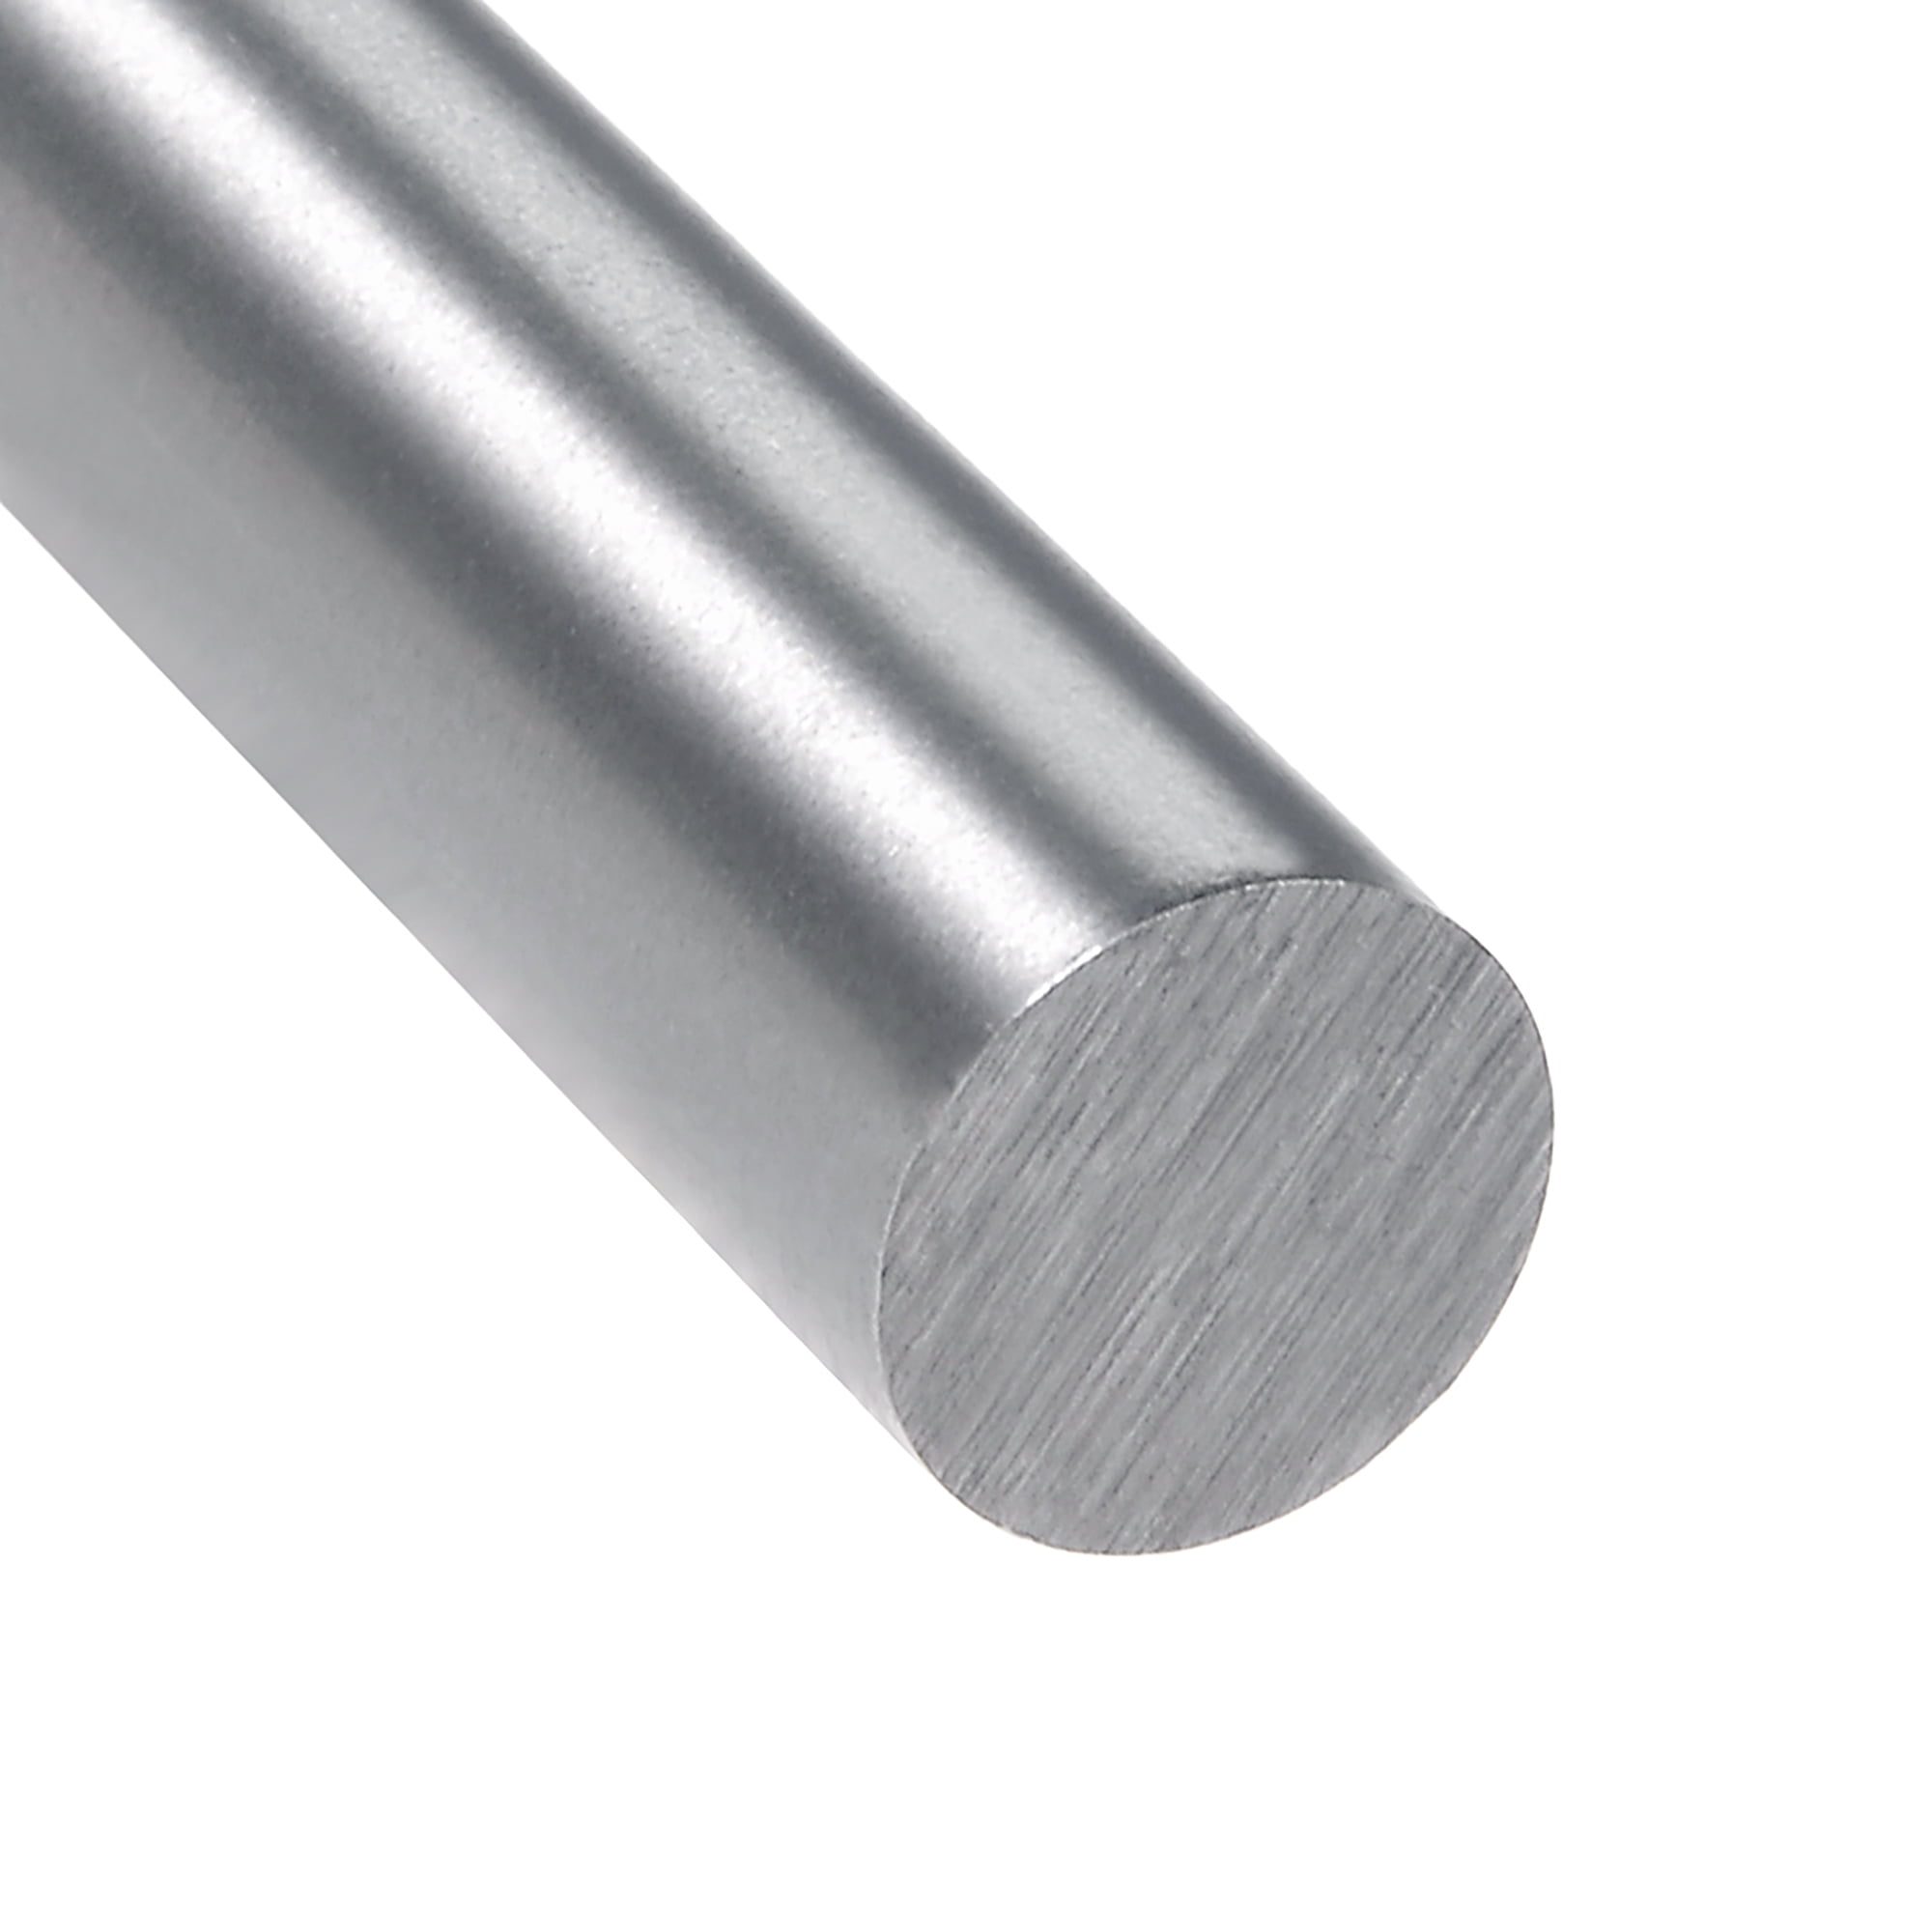 HSS Lathe Round Rod Solid Shaft Rod 5.3 mm Diameter 100 mm Length 10 pieces